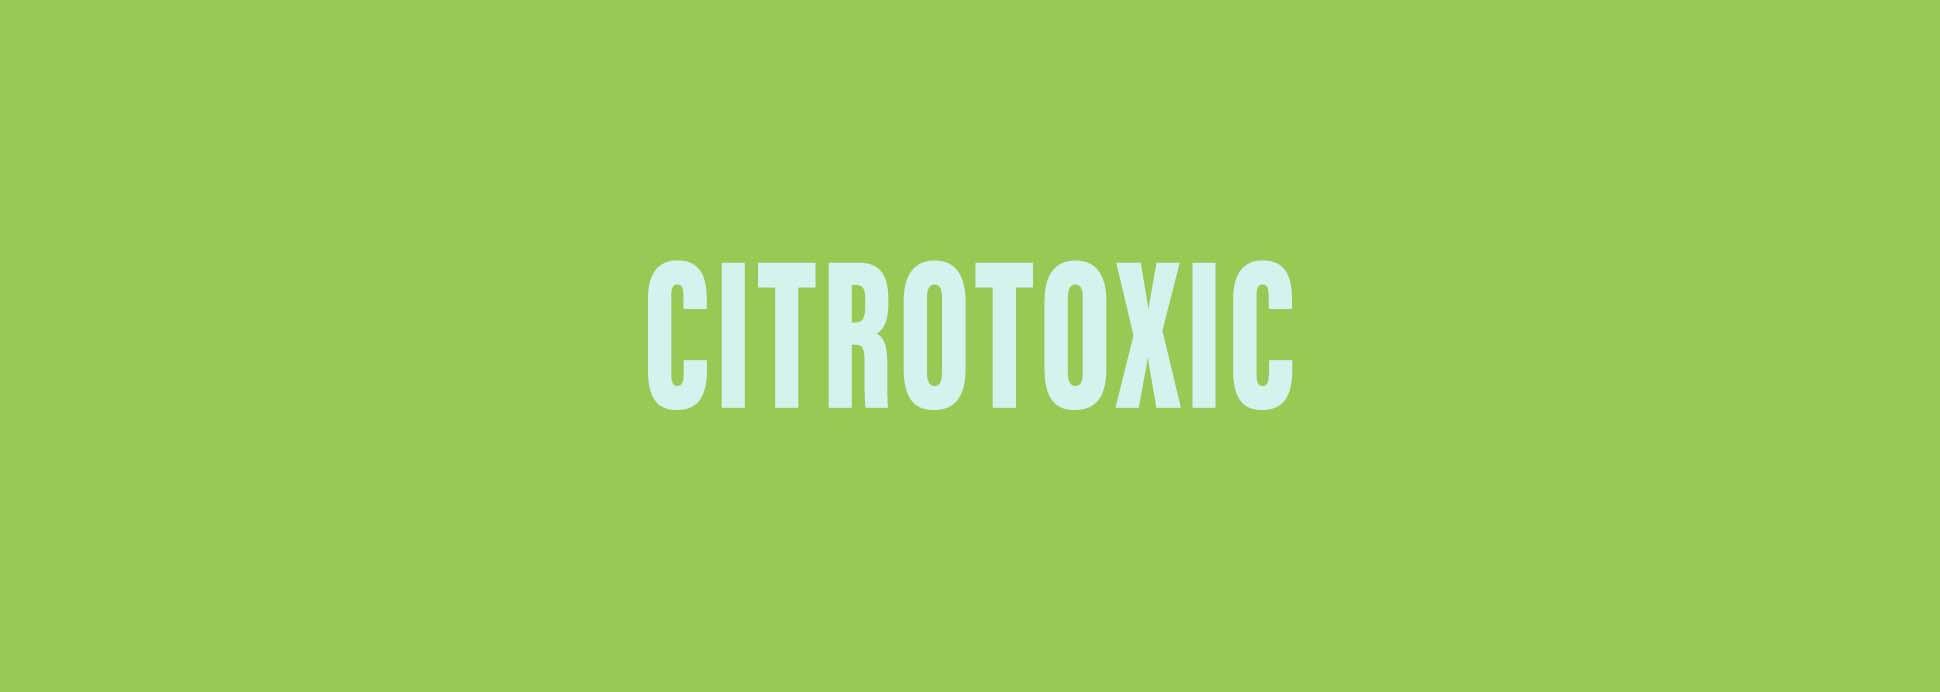 Citrotoxic